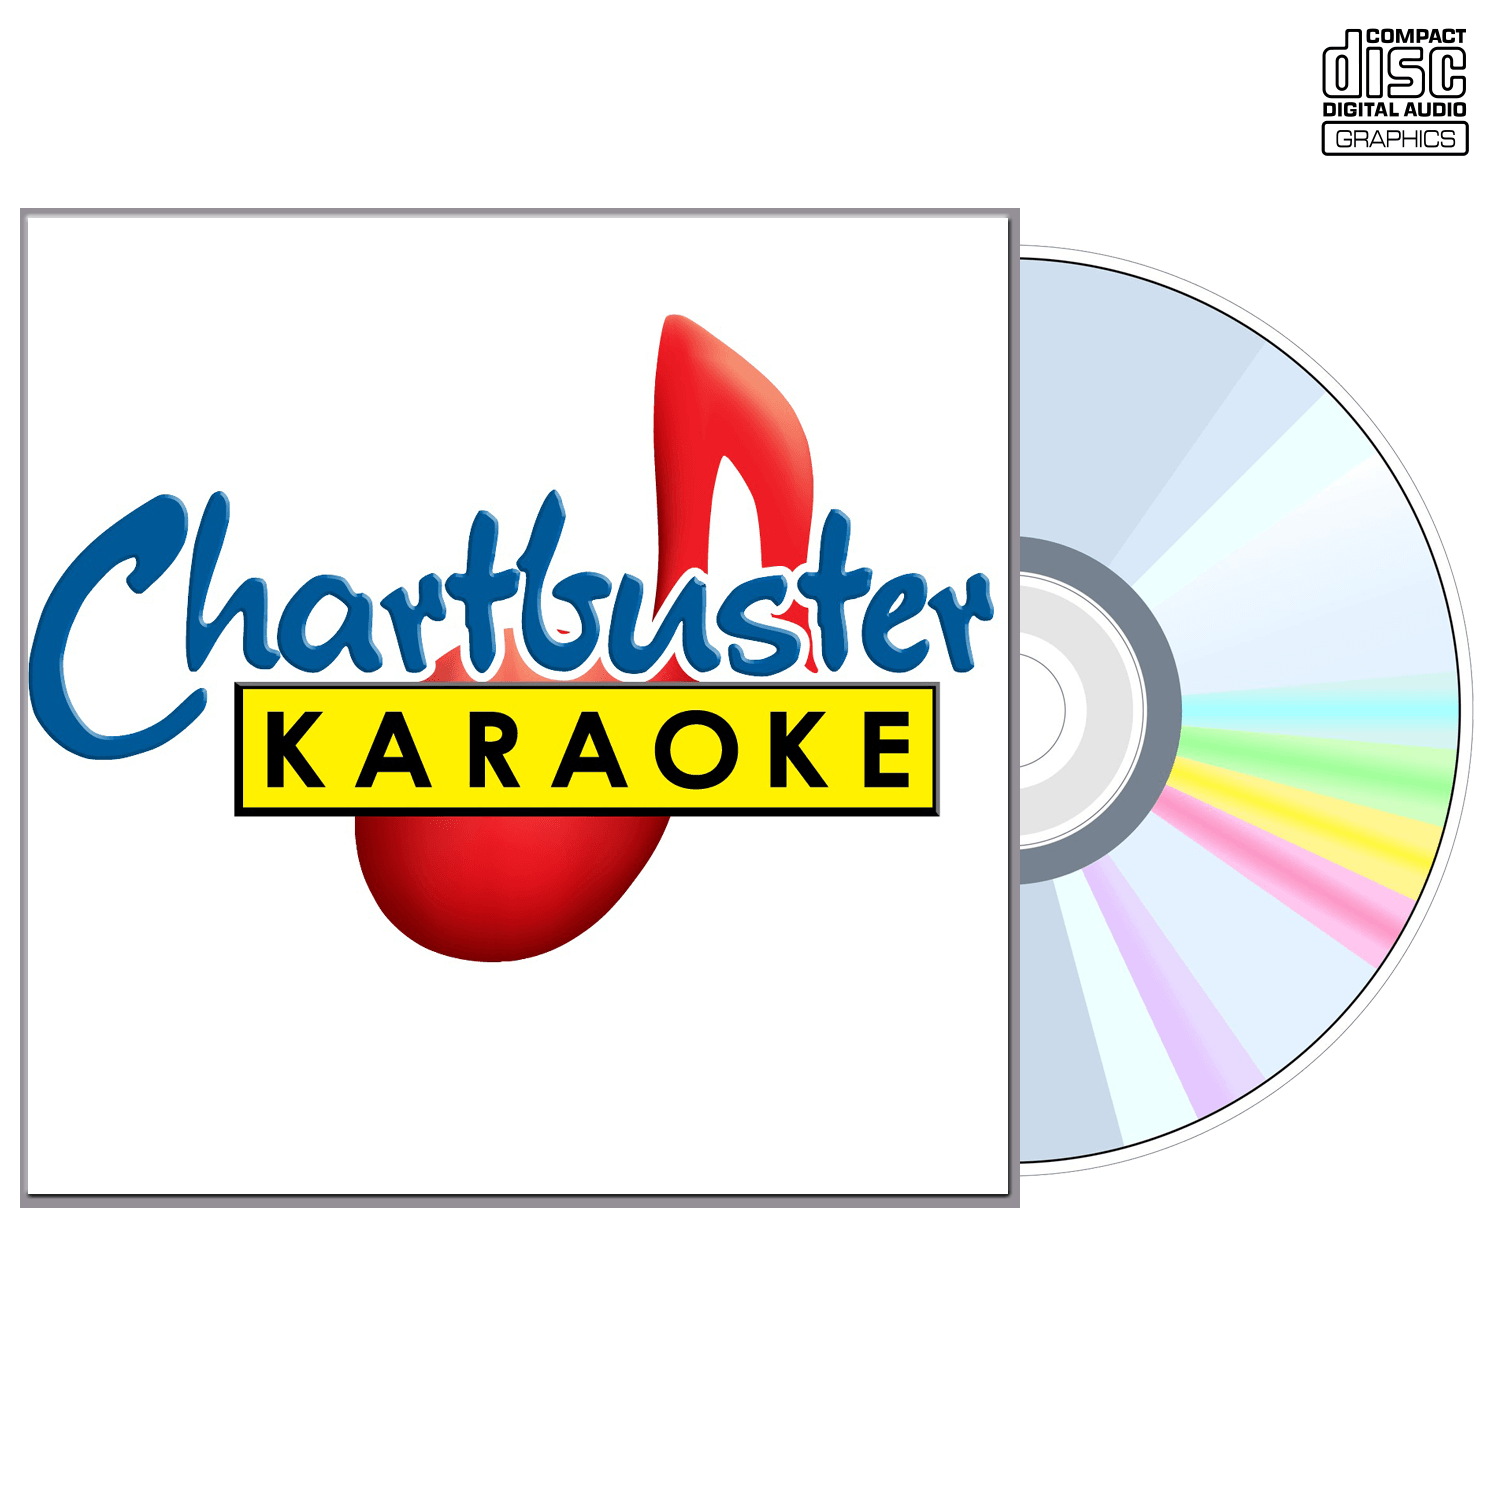 Usher Vol 2 - CD+G - Chartbuster Karaoke - Karaoke Home Entertainment